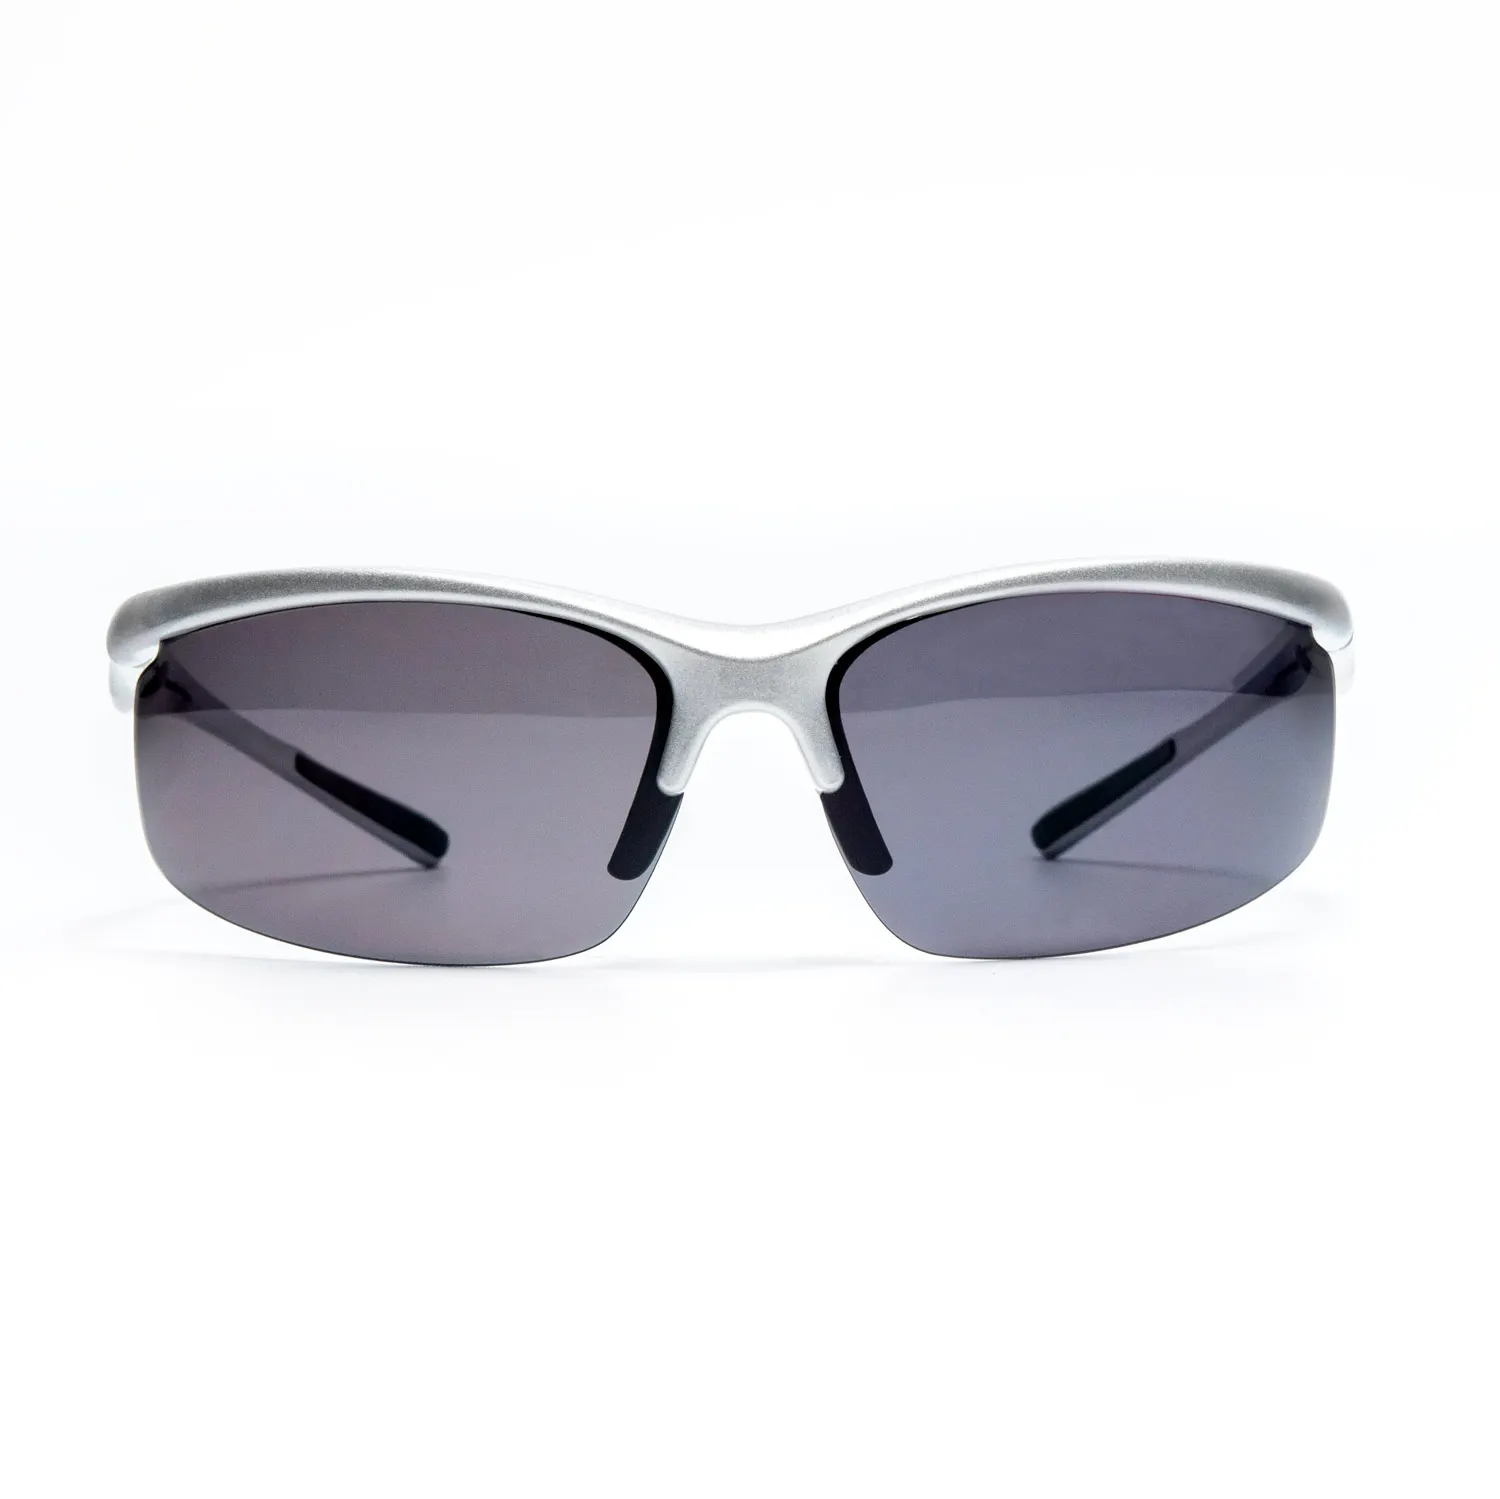 Sunglasses Mens Uv400 Wholesale Float Glasses Sport Sun Glasses Tr90 Frame Outdoor Fishing Beach Surfing Sunglasses